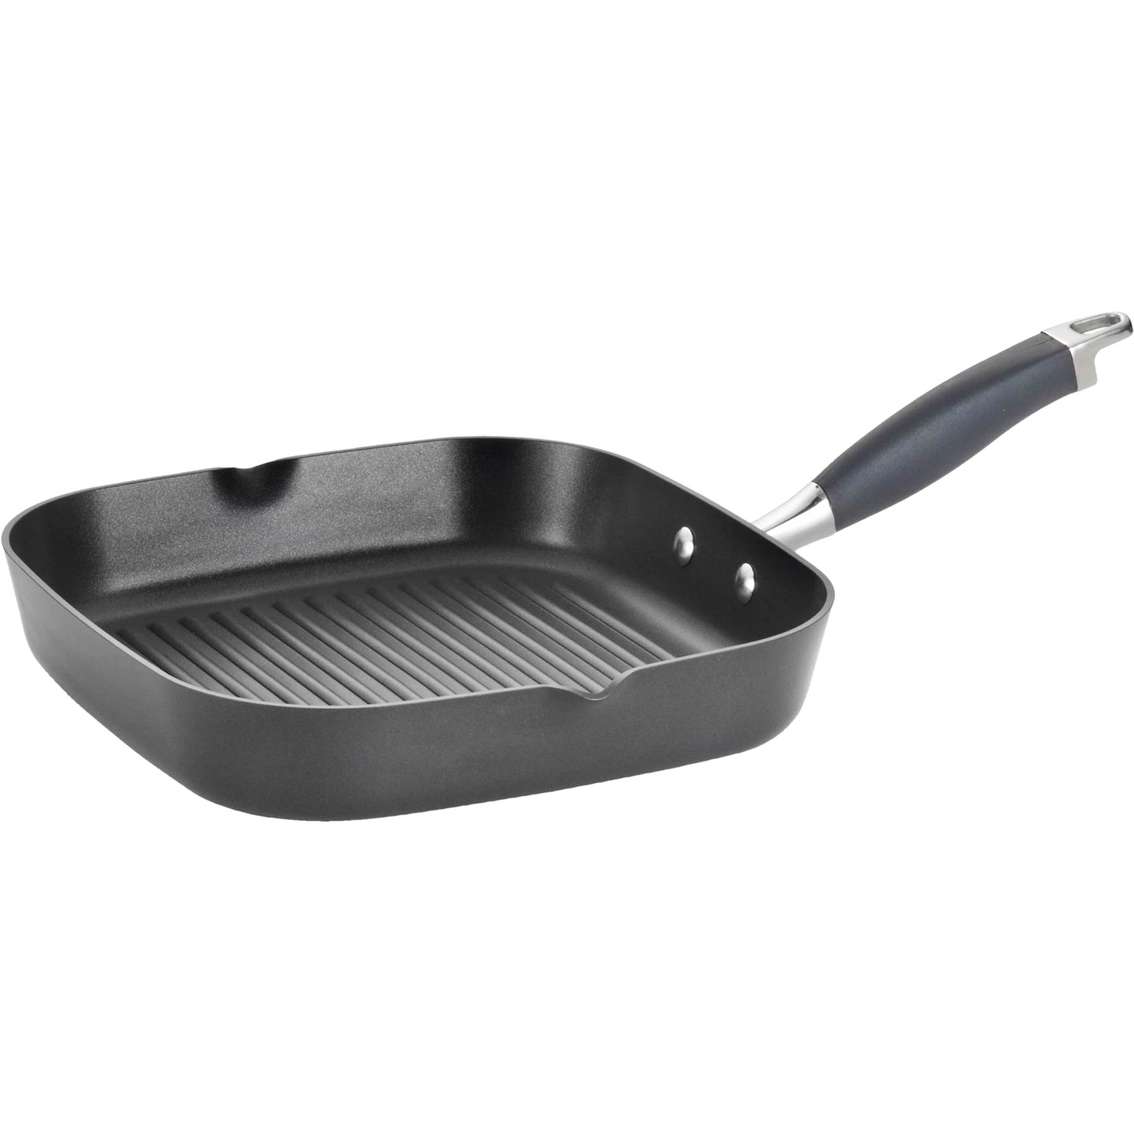 Anolon Advanced 12 Deep Non-Stick Frying Pan